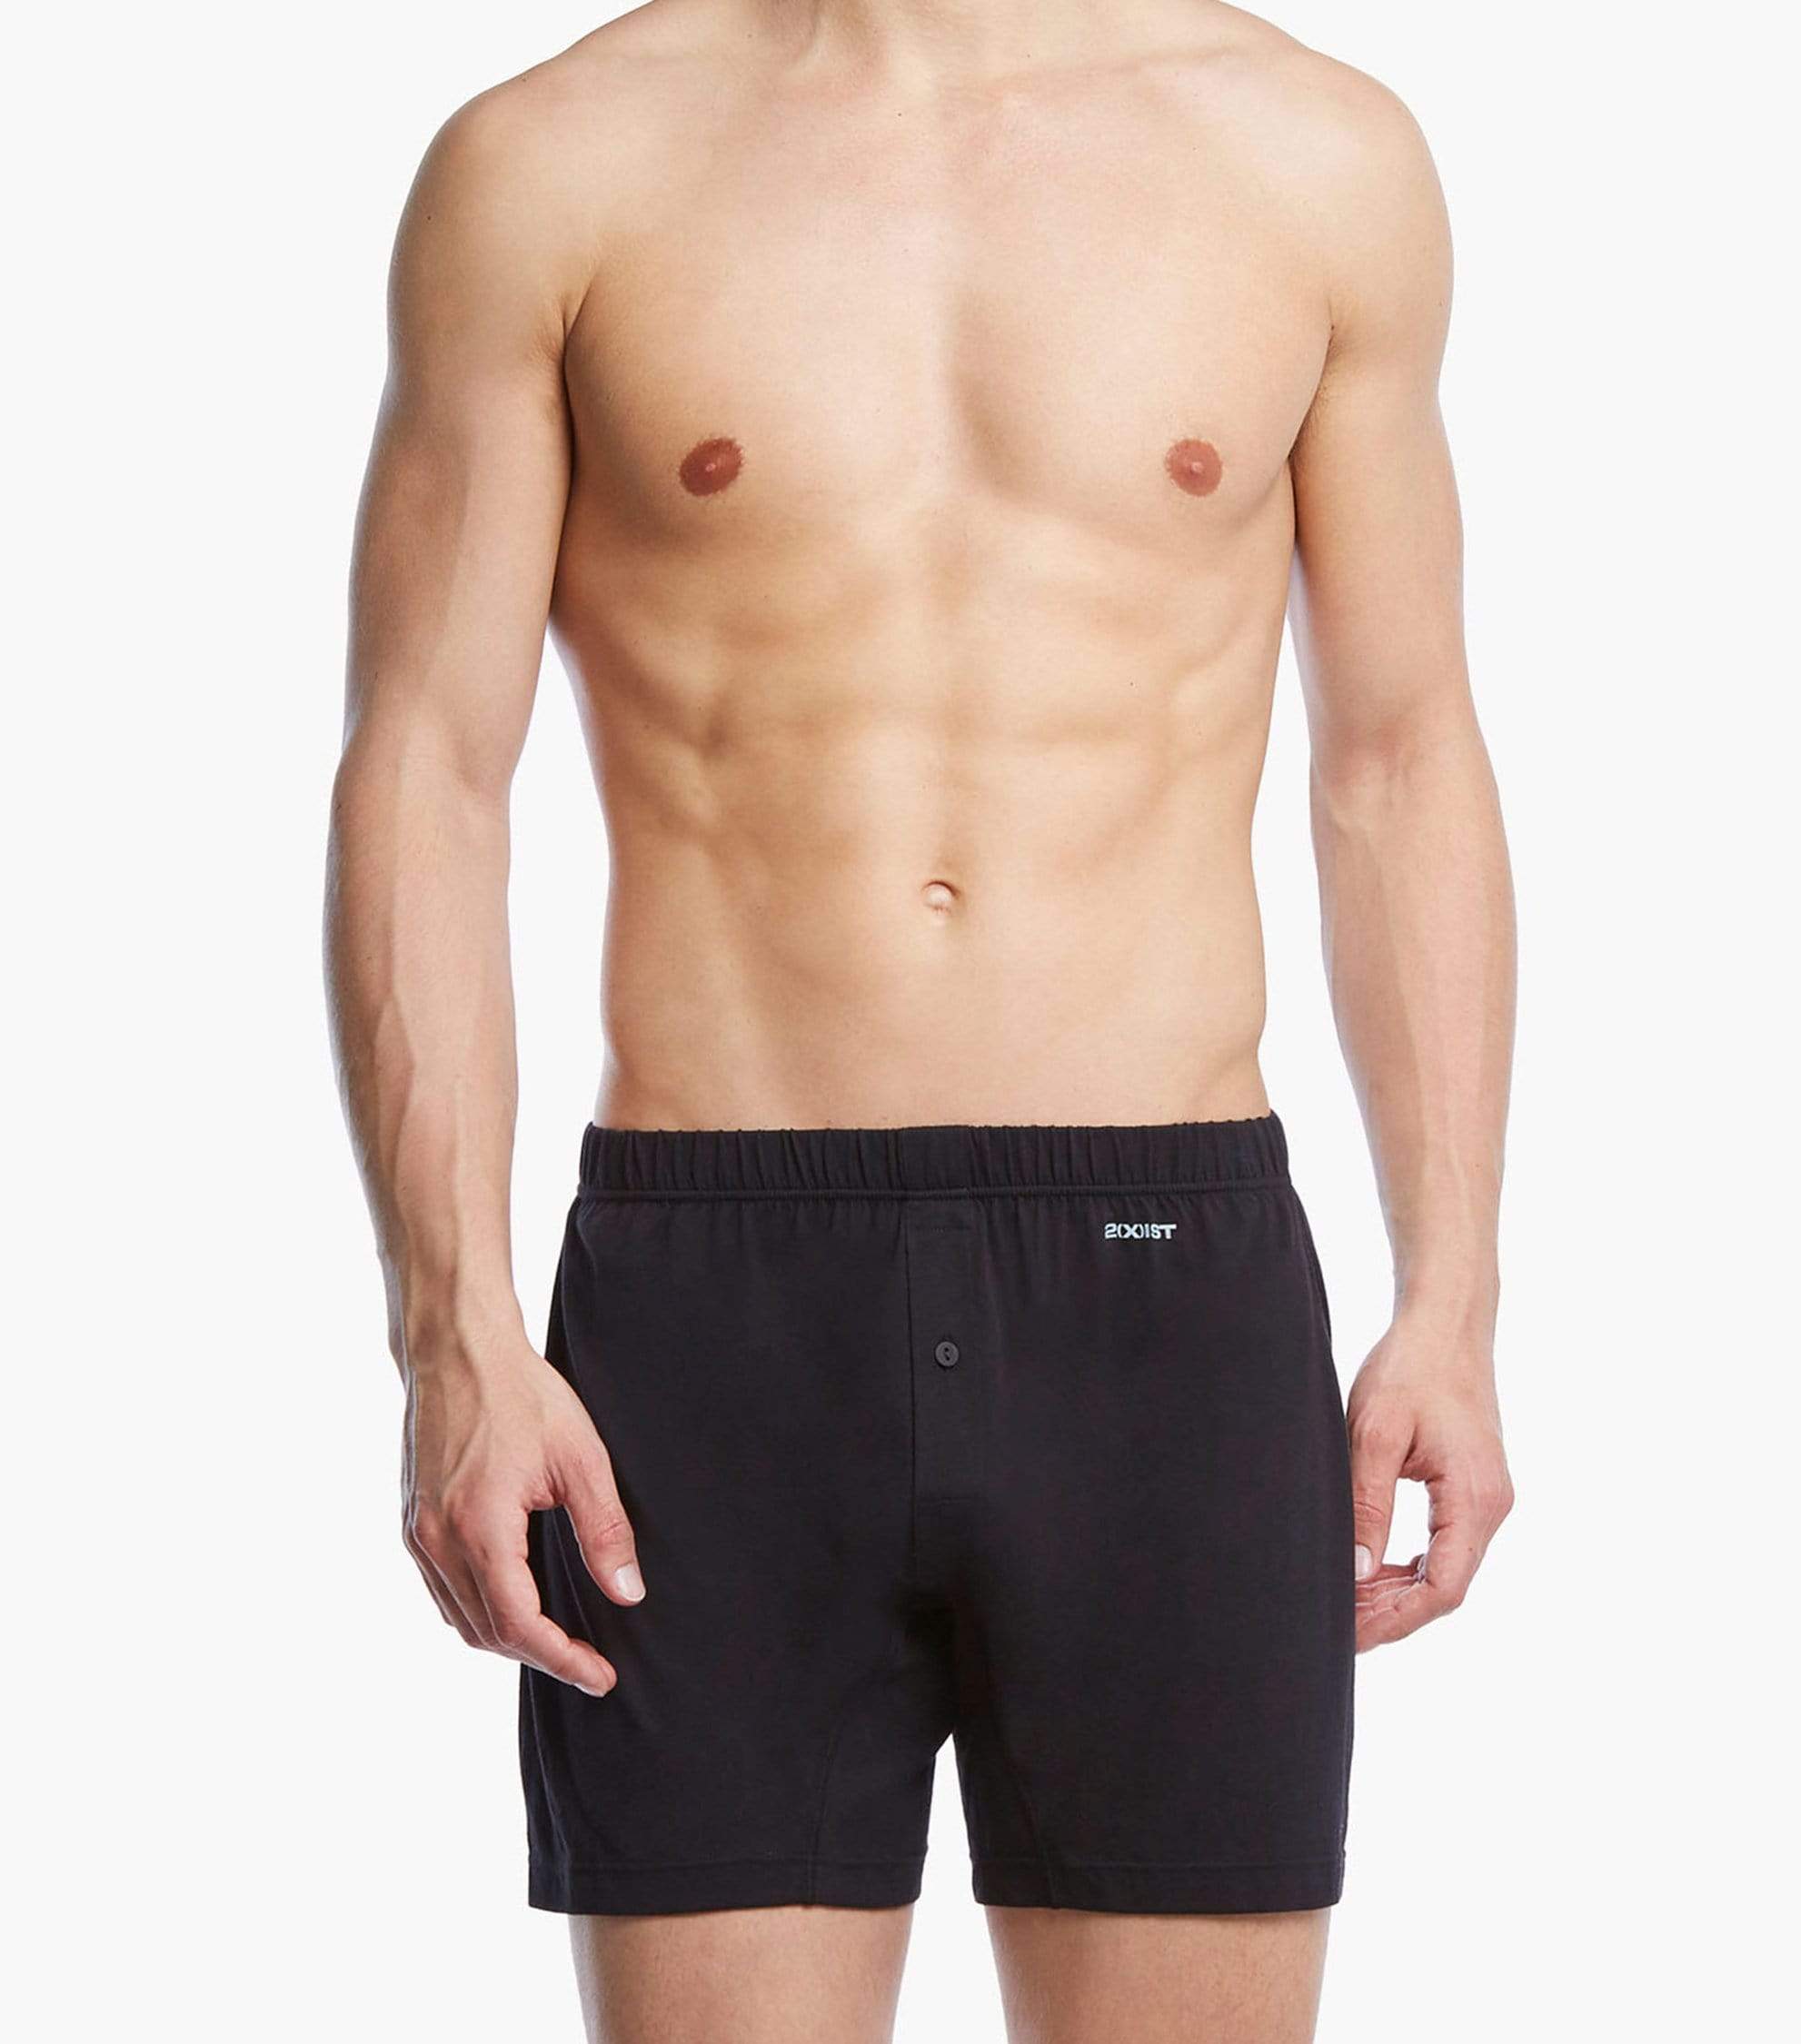 2 x Men's Woven Boxers Underwear 100% Cotton Boxer Shorts Underwear For Men, Shop Today. Get it Tomorrow!